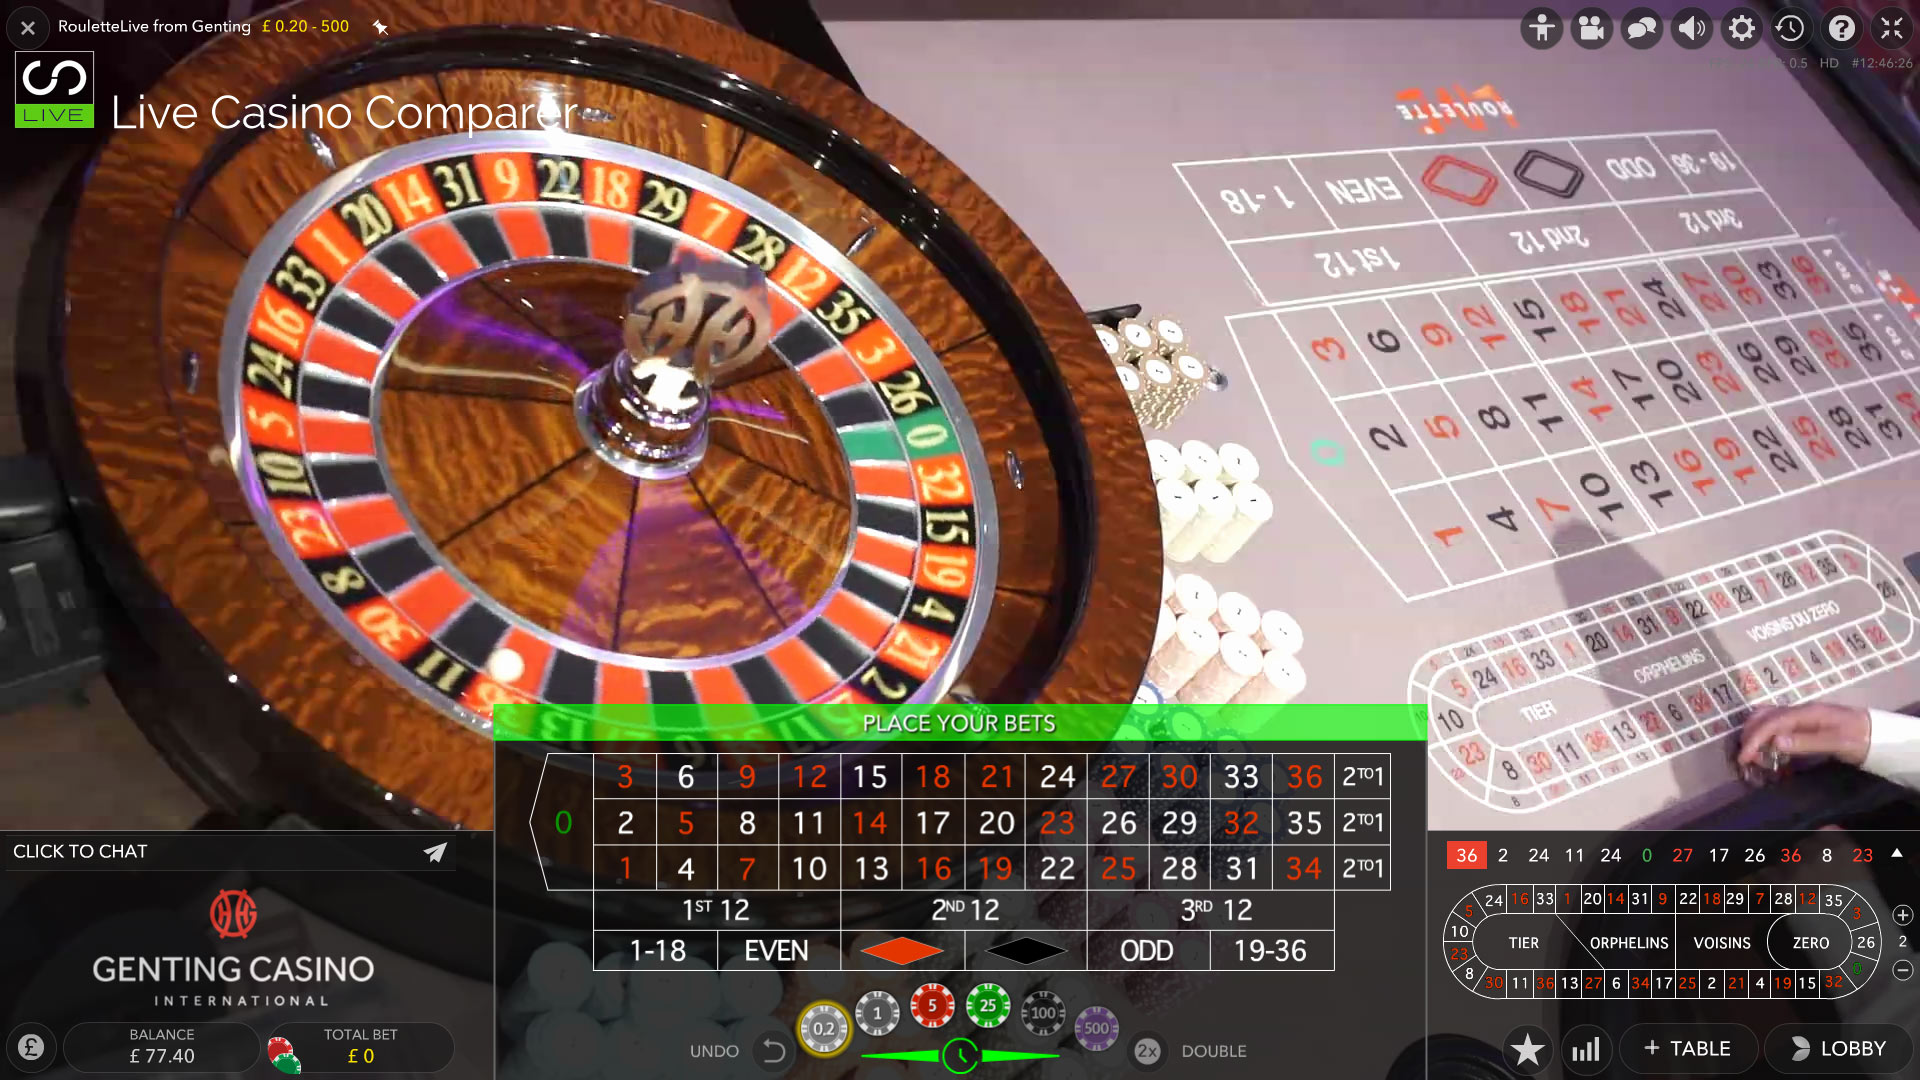 favbet casino online